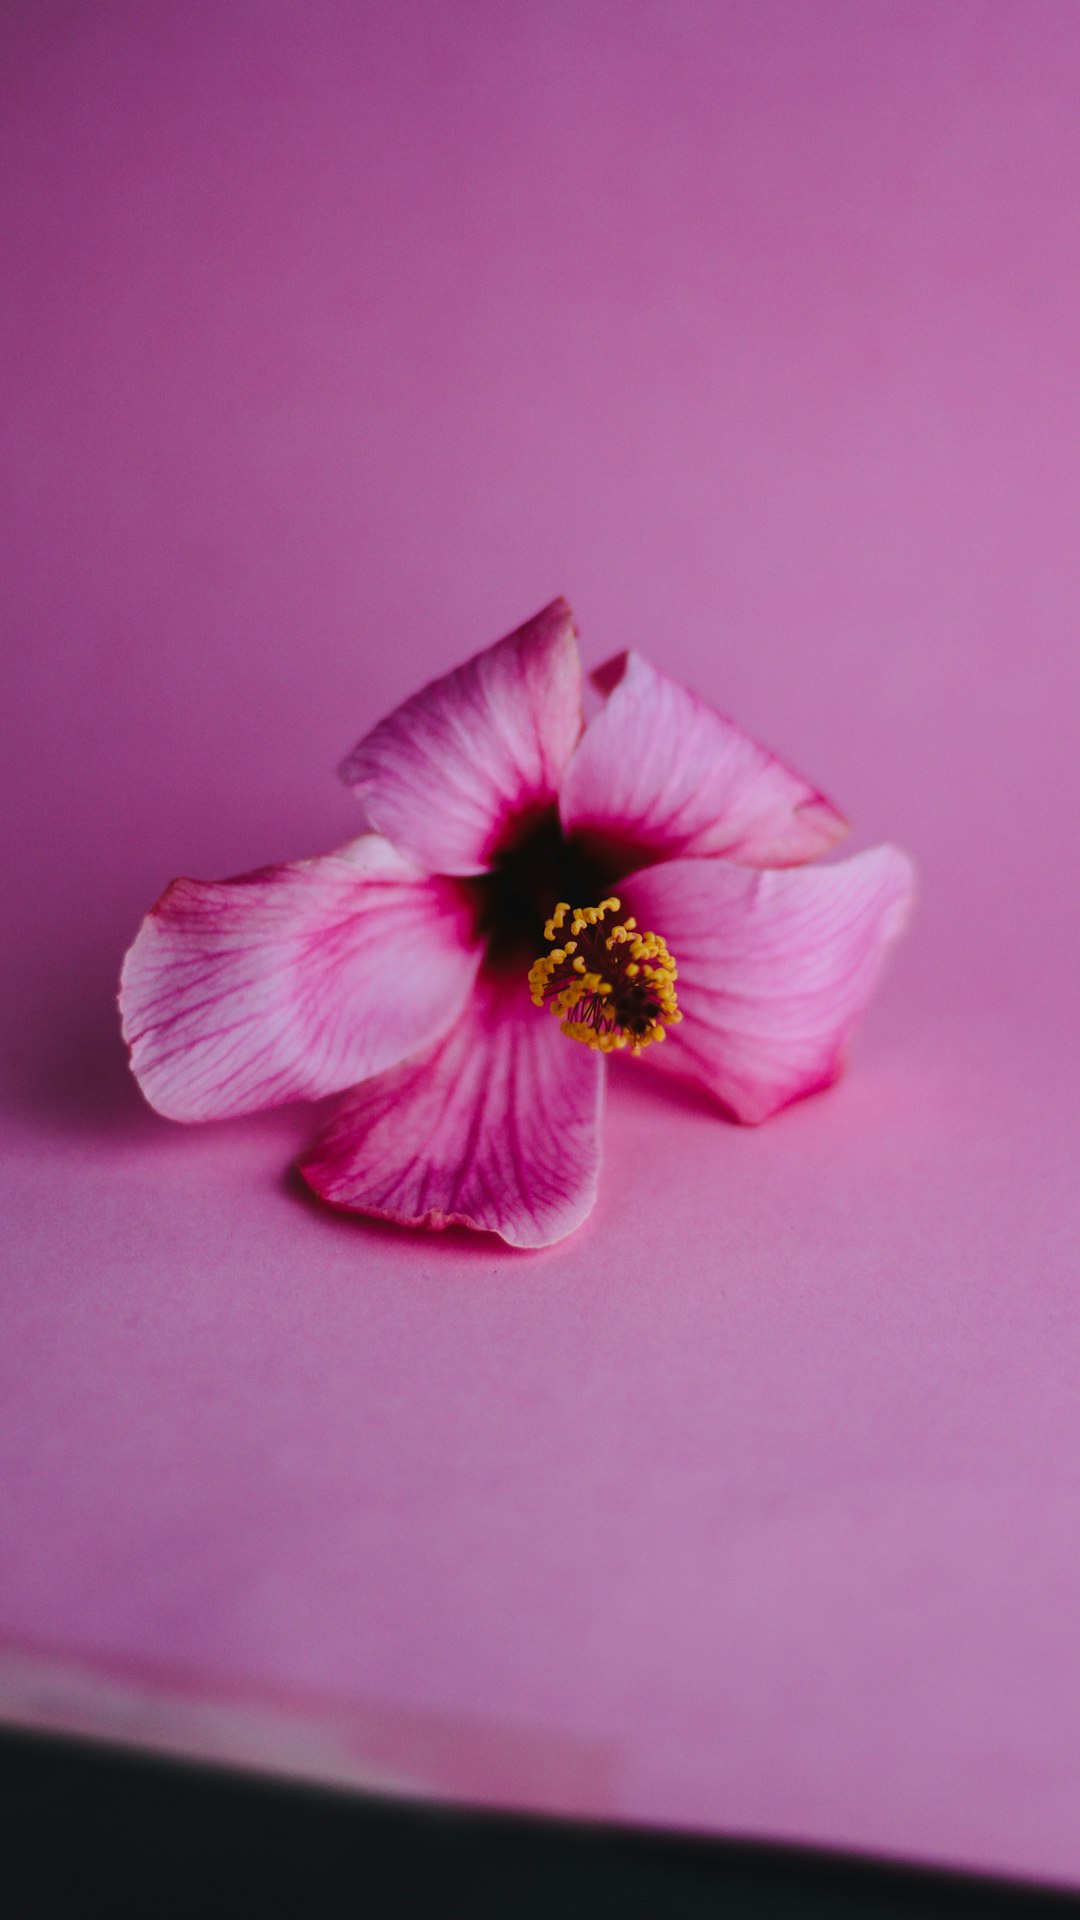 pink hibiscus